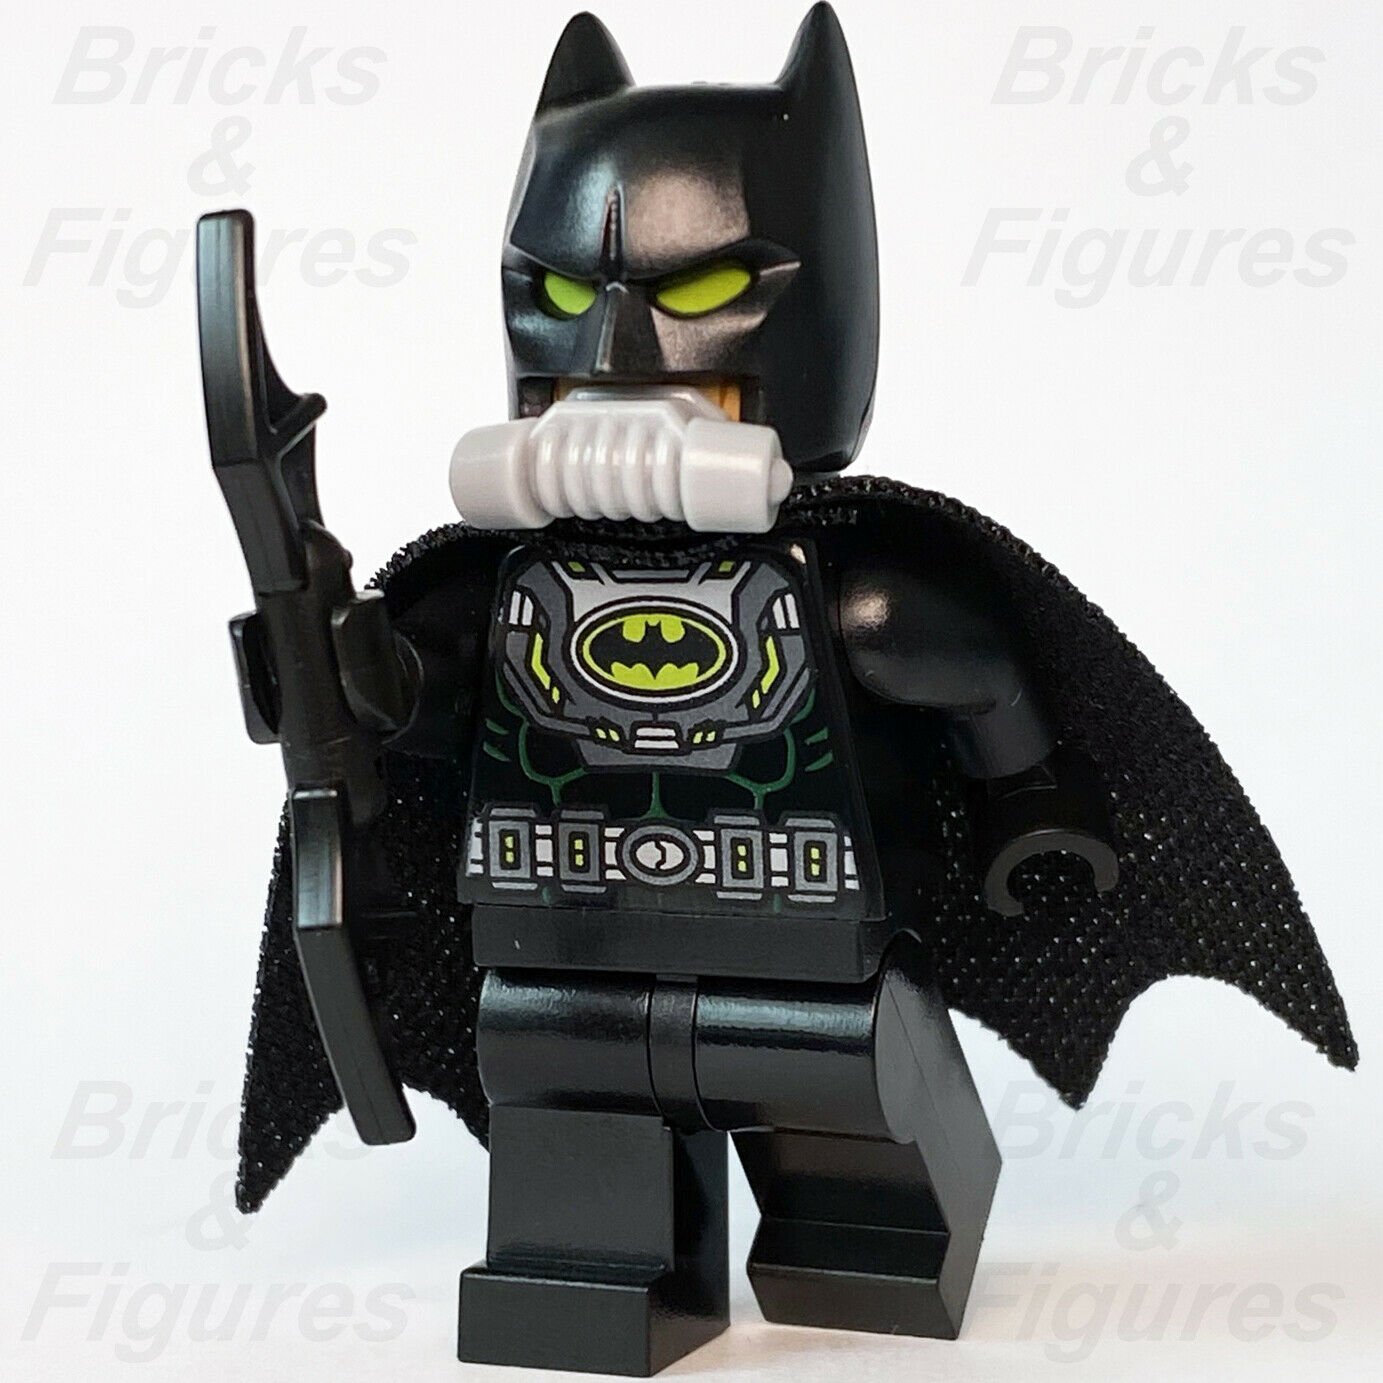 DC Super Heroes LEGO Batman with Gas Mask Bruce Wayne Batman 2 Minifigure 76054 - Bricks & Figures